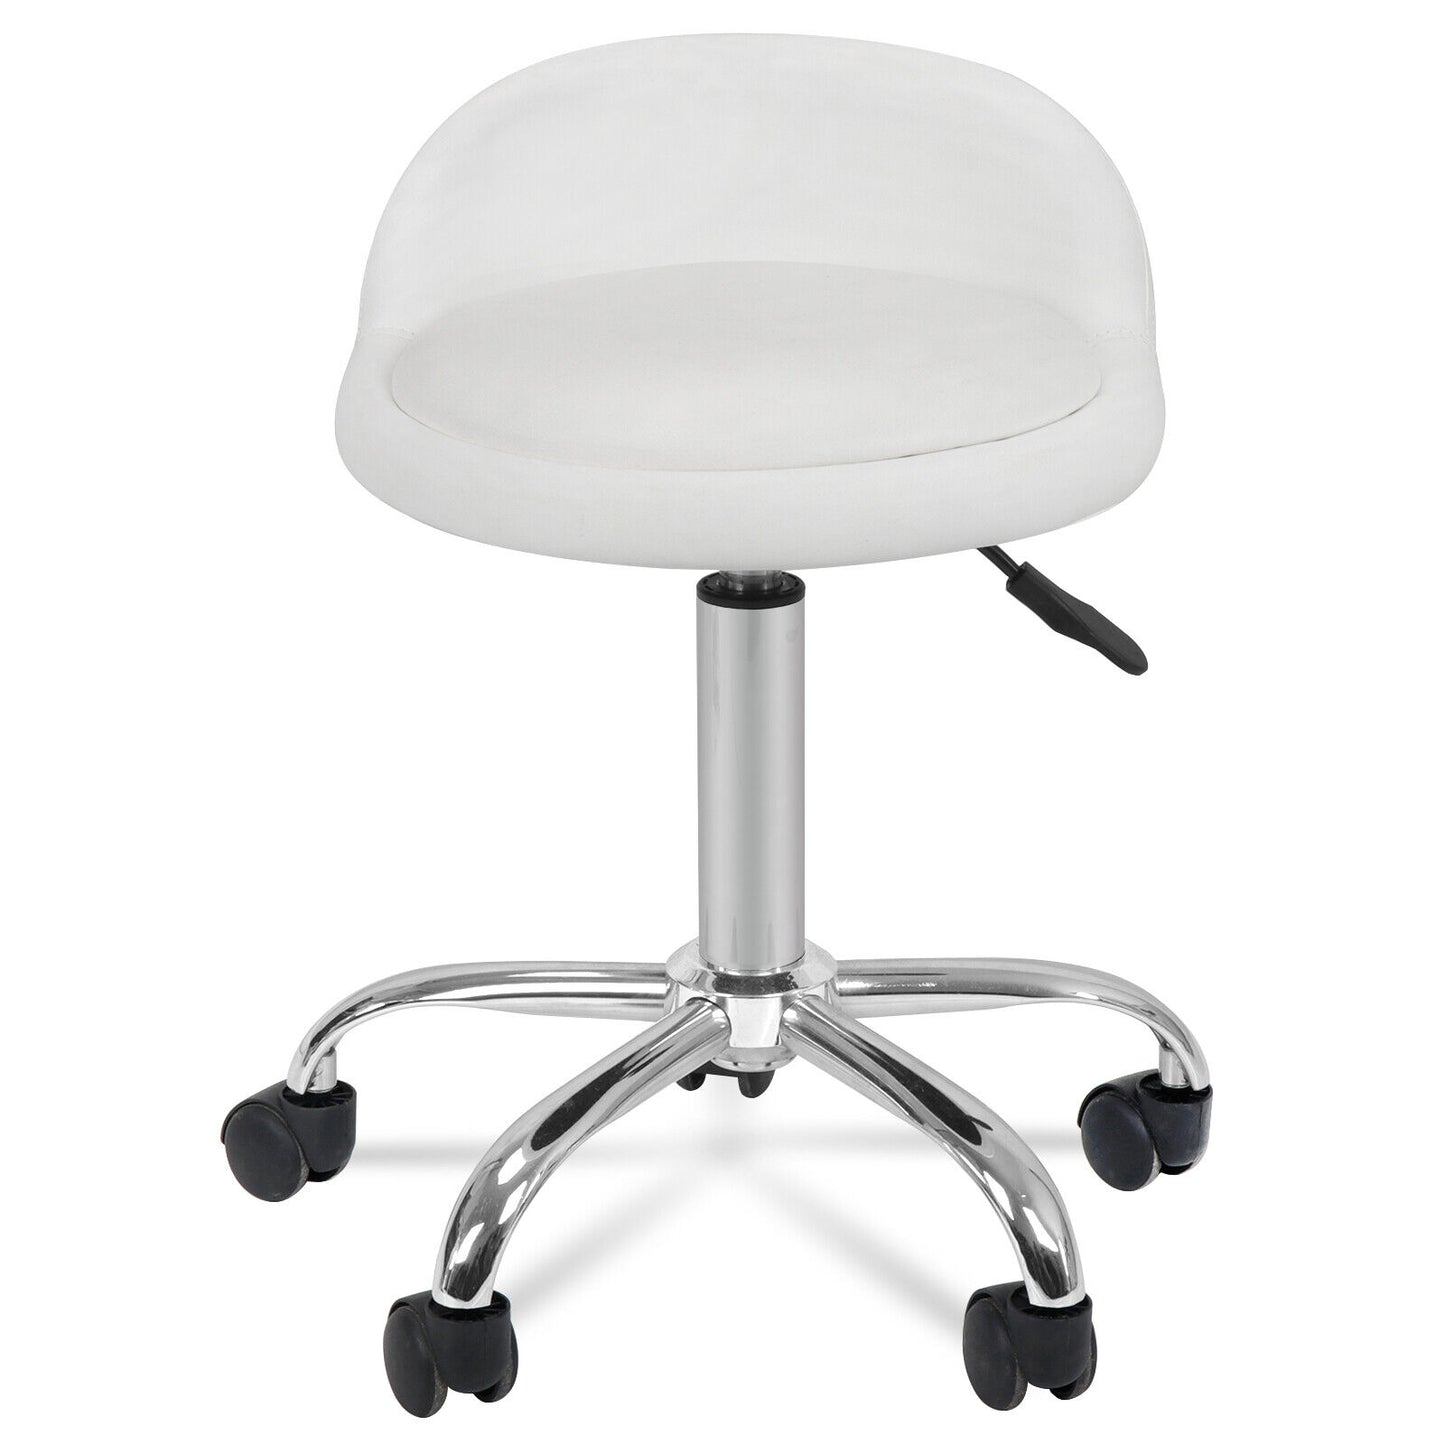 2X Adjustable Height Hydraulic Rolling Swivel Stool Spa Salon Chair w/Back Rest